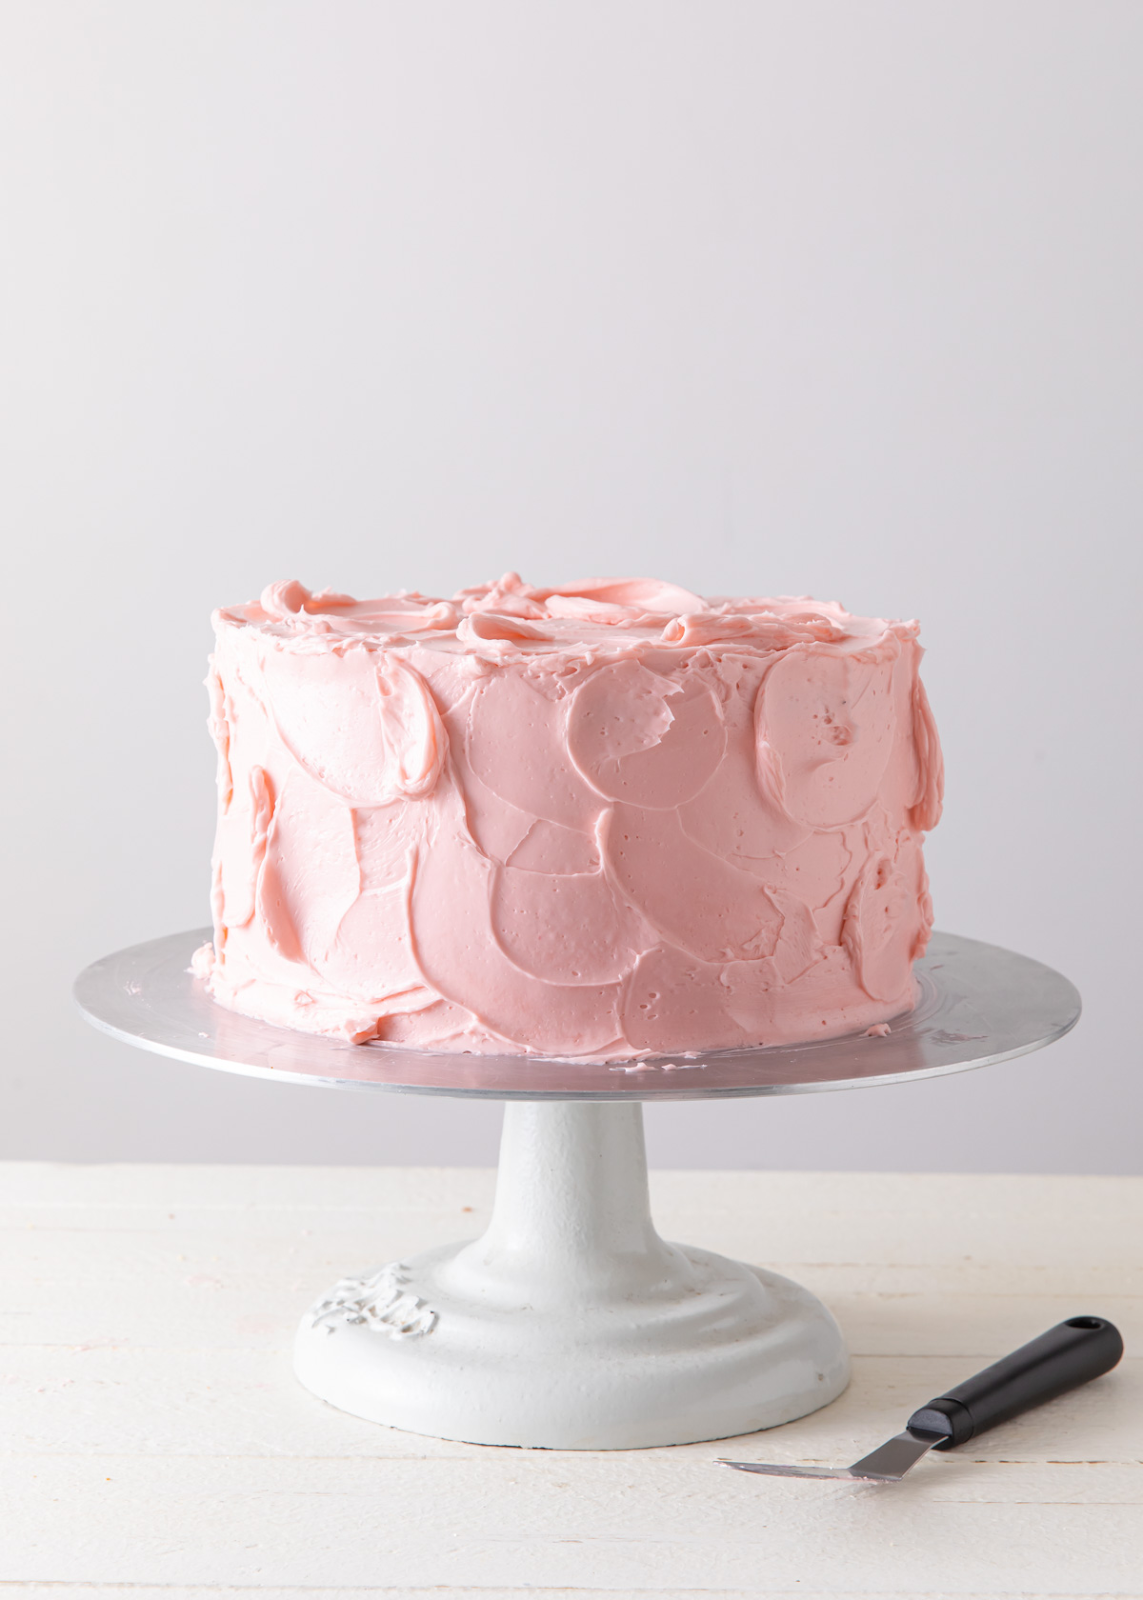 Ideas for A 50th Birthday Cake